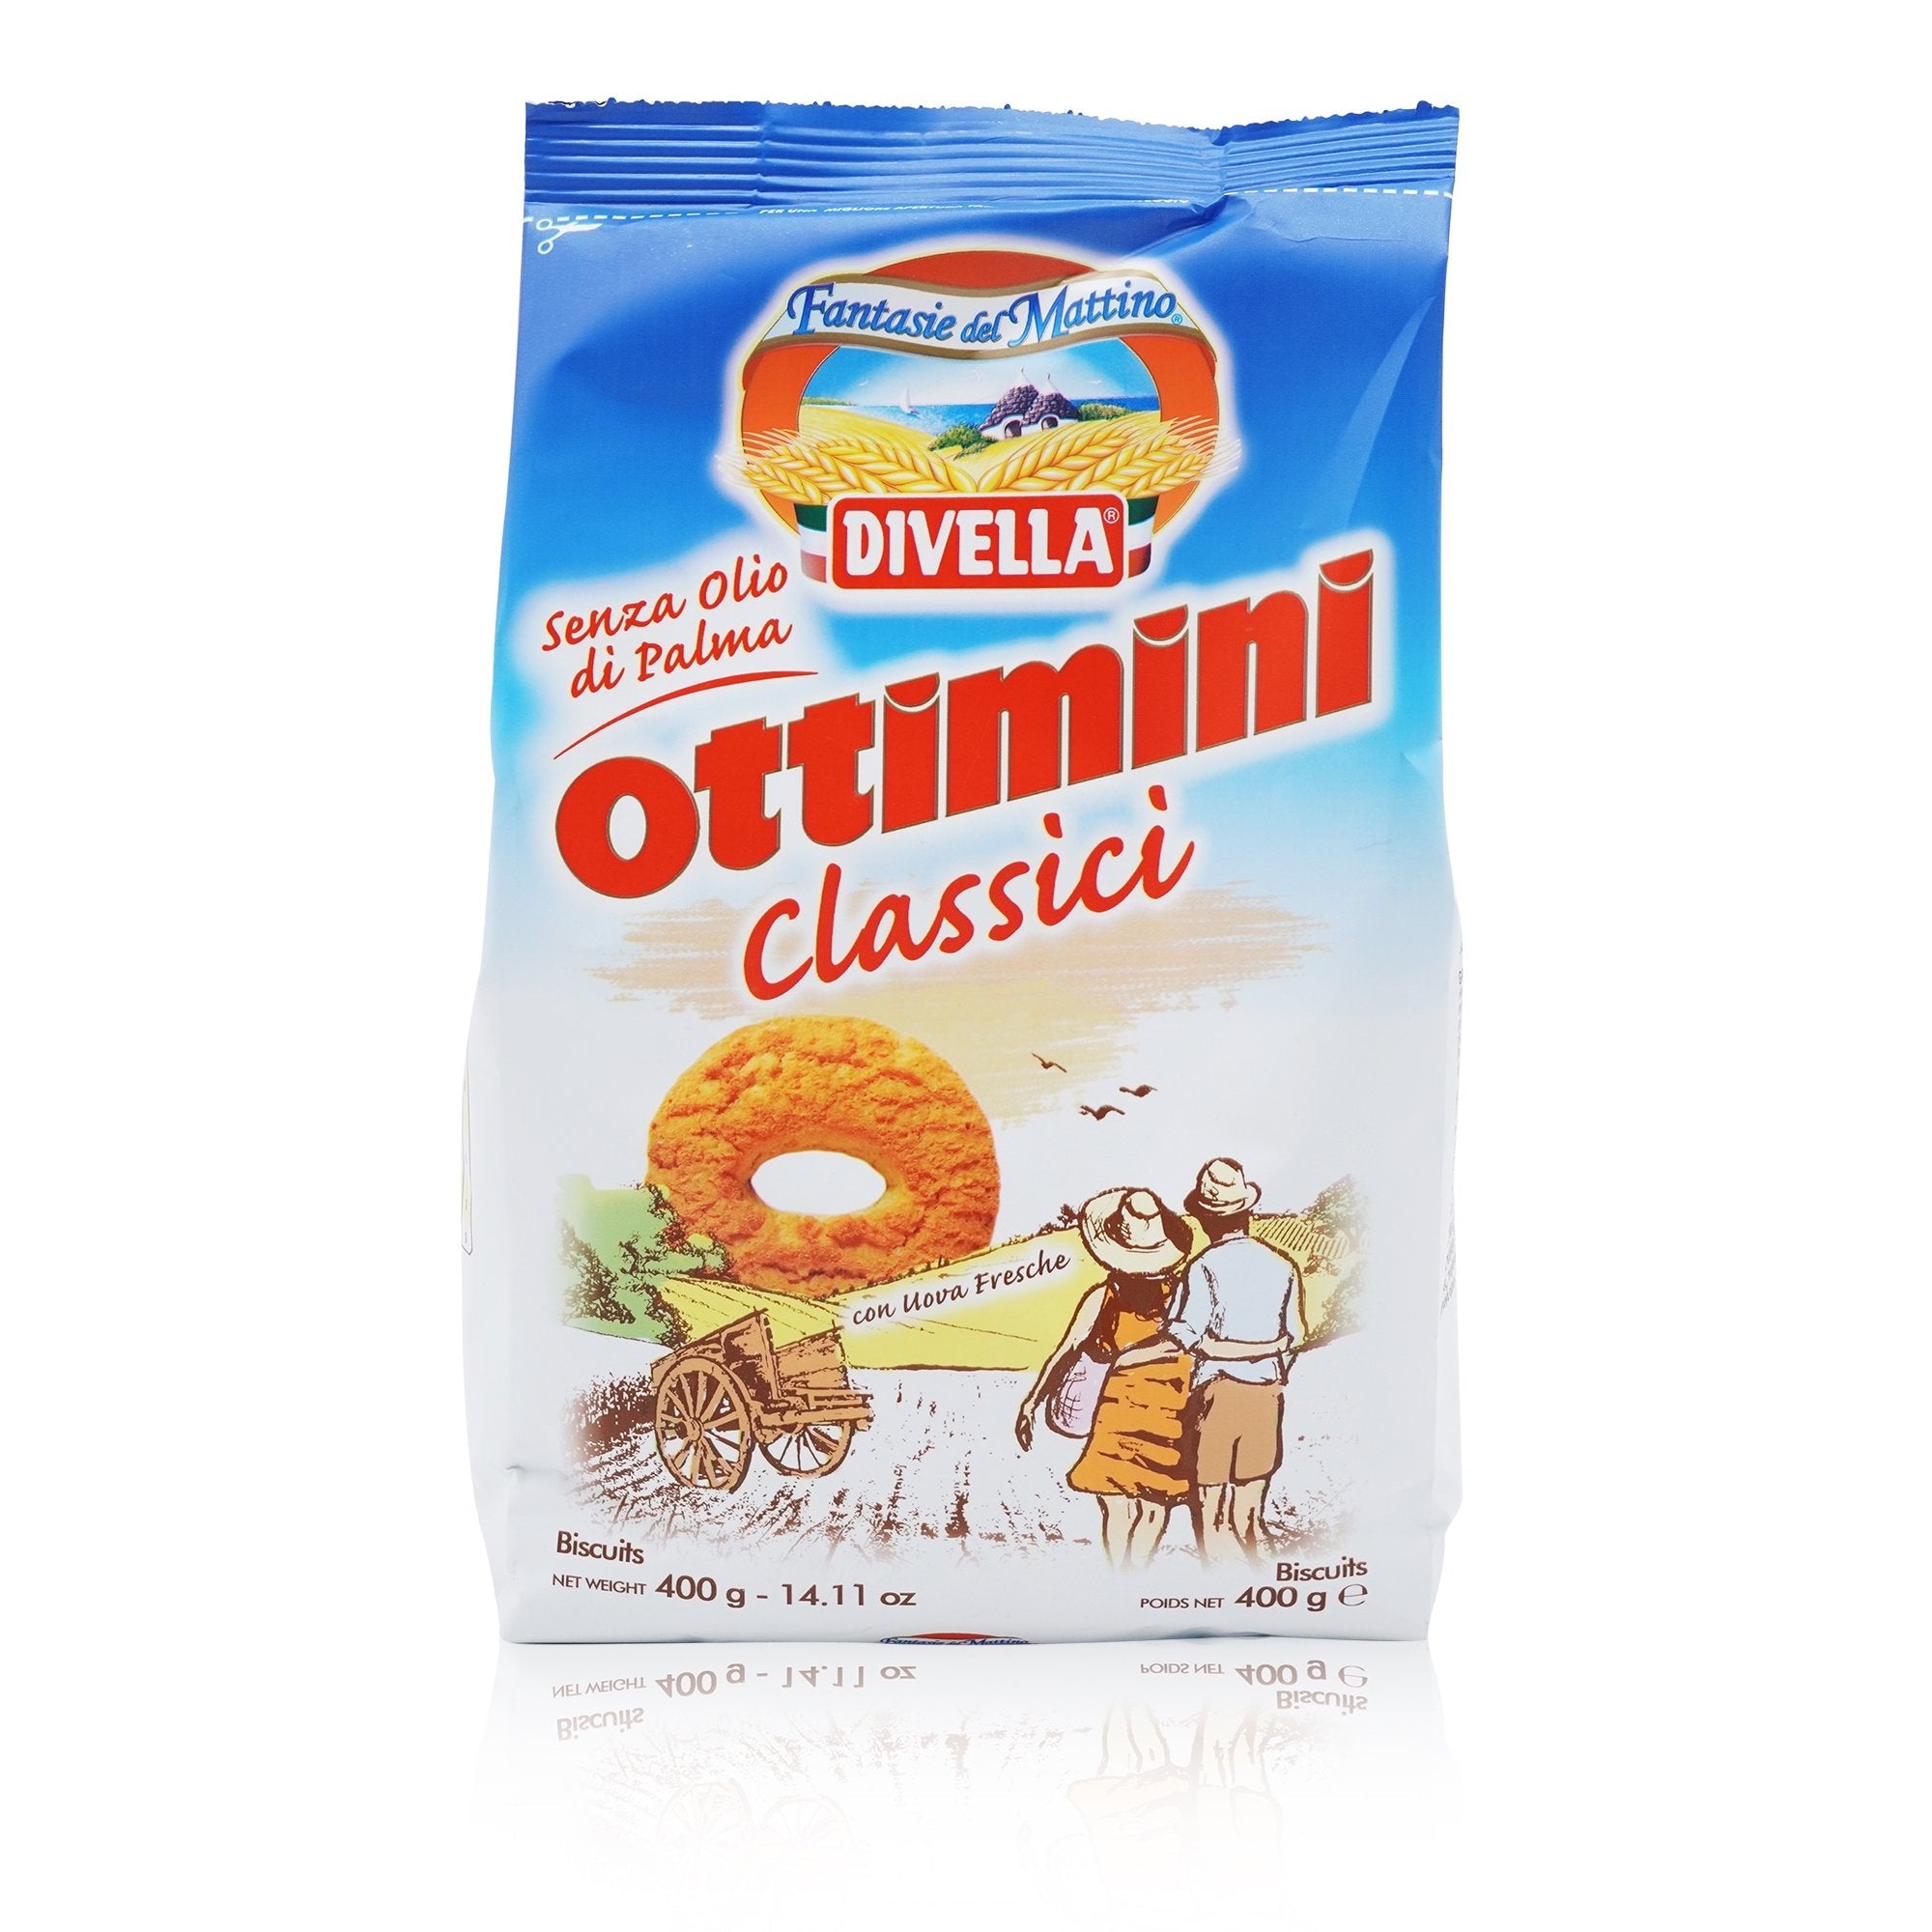 DIVELLA Biscotti Ottimini classici – Kekse Ottimini klassisch - 0,400kg - italienisch-einkaufen.de